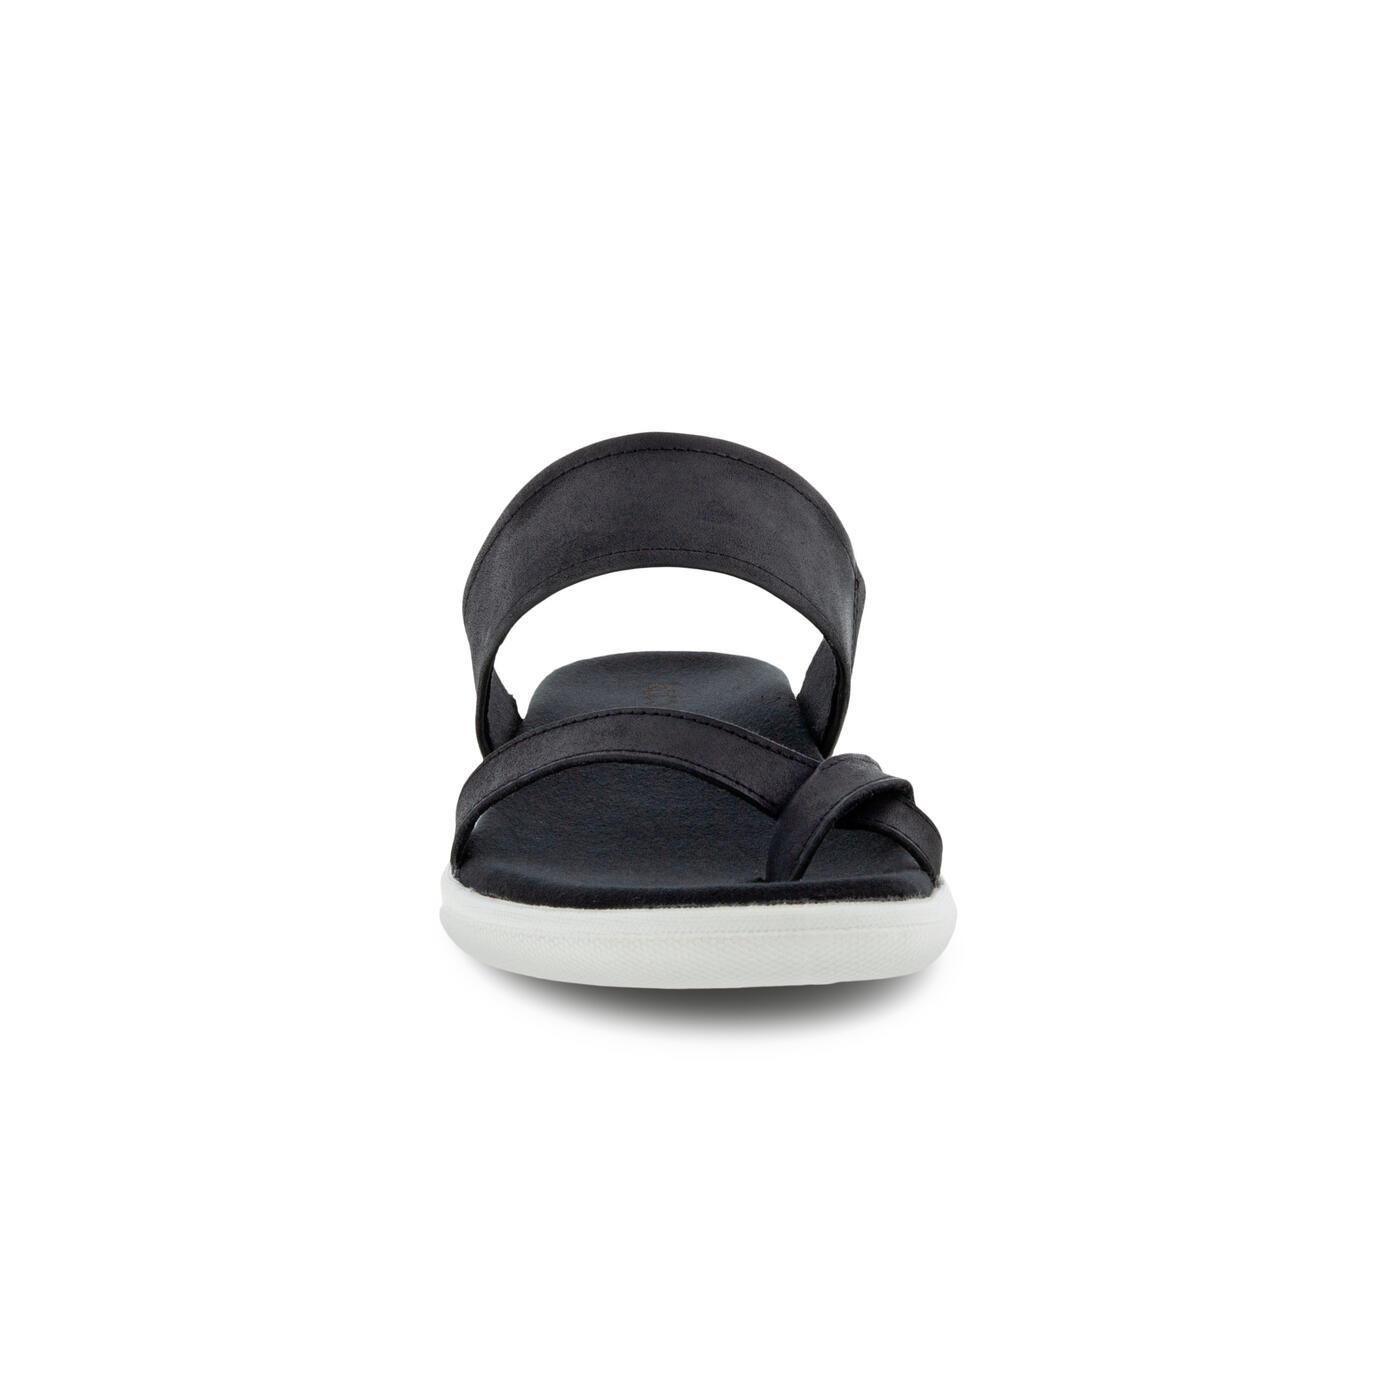 Ecco Damara Sandal Slide Size in Black | Lyst